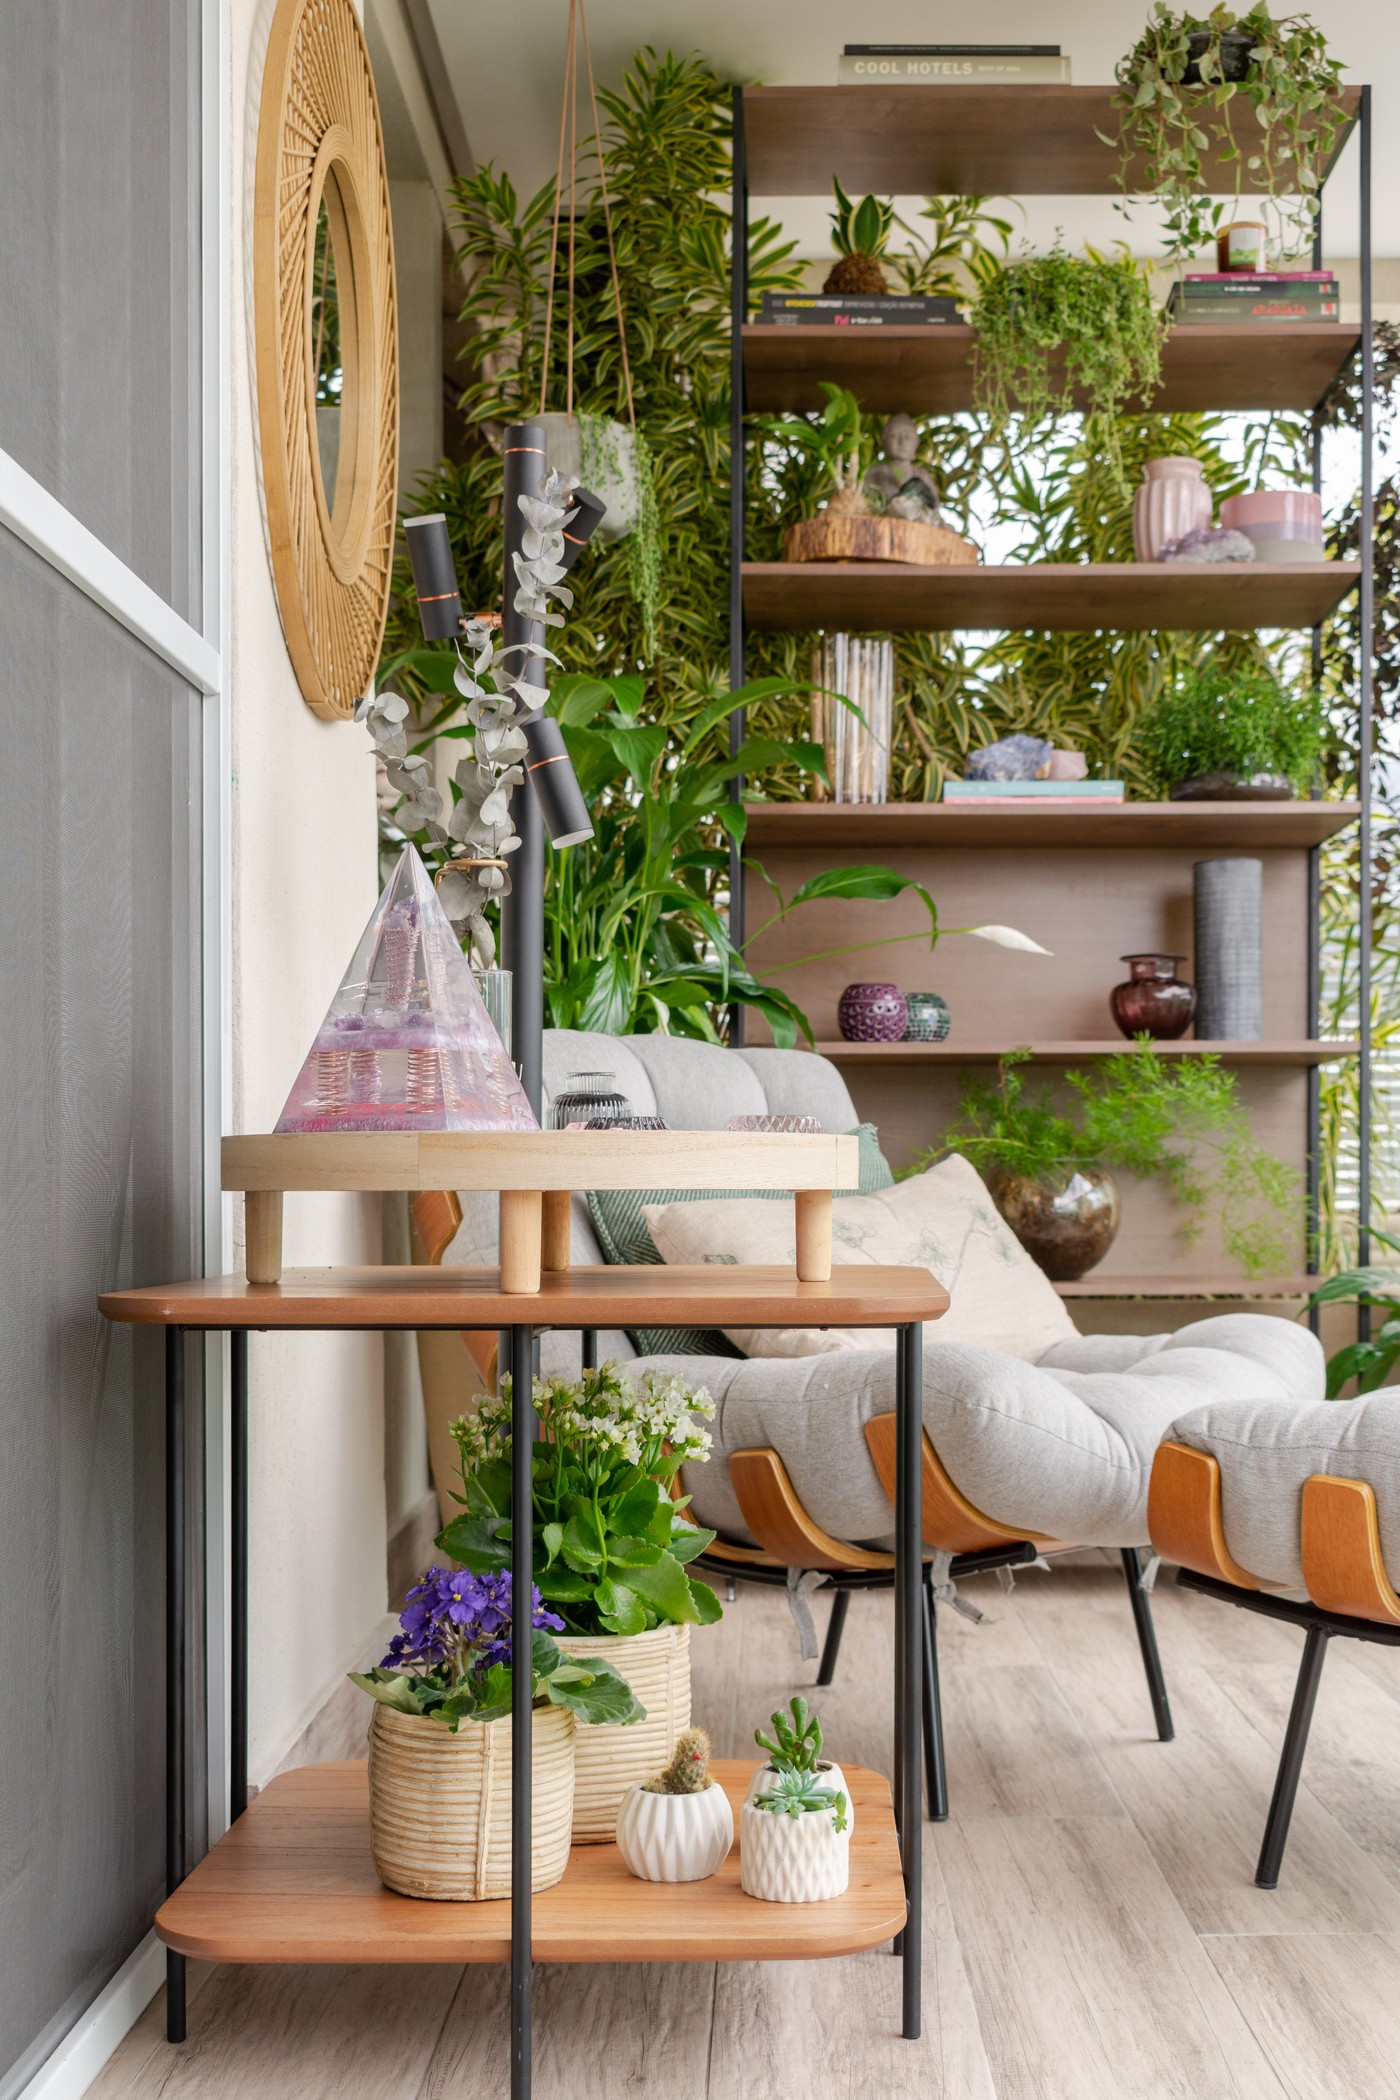 Maytê Piragibe mostra varanda inspirada em jardim encantado (Foto: Lília Mendel)